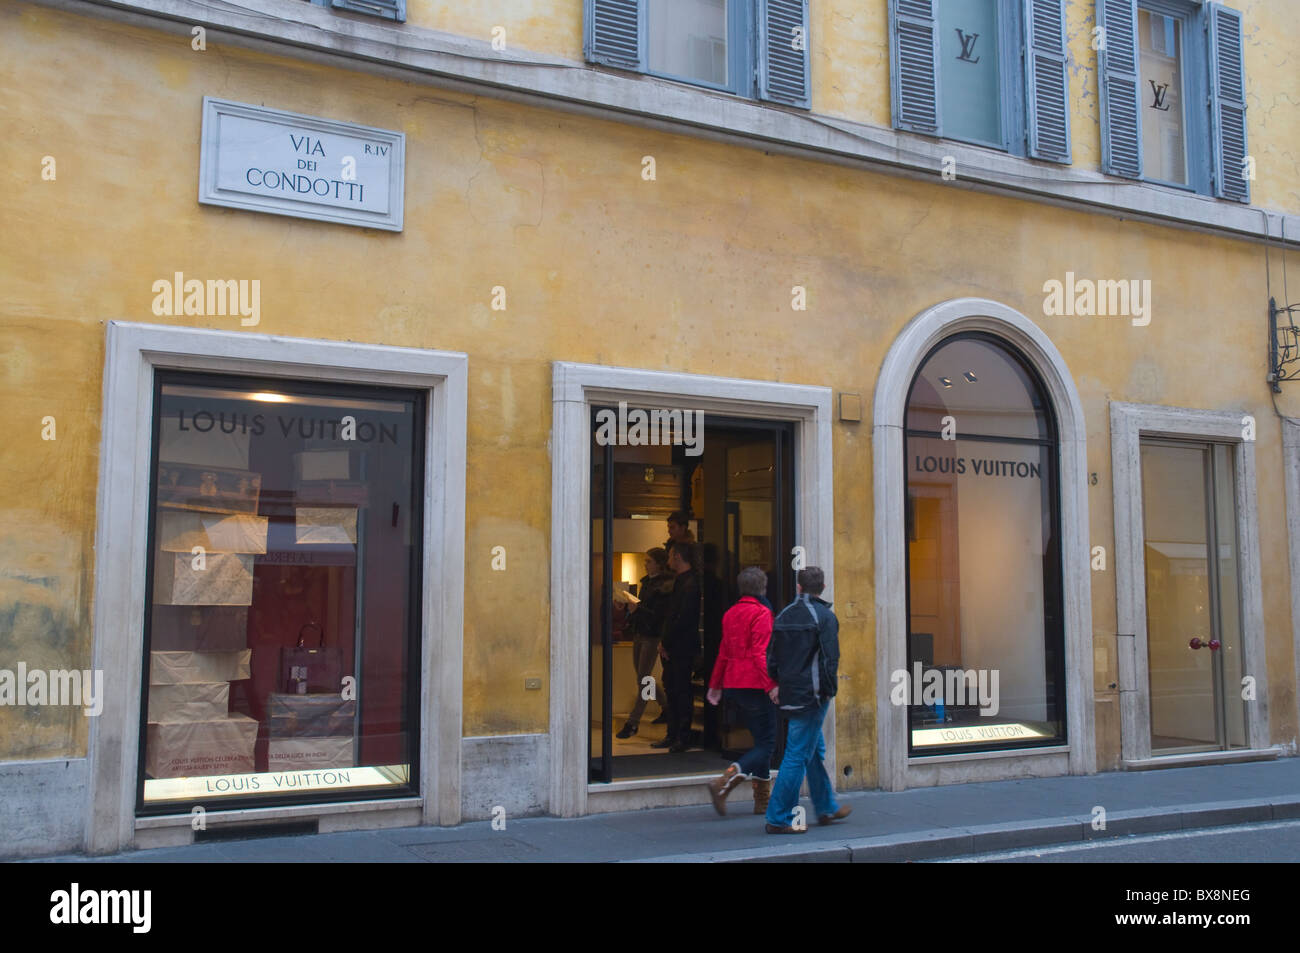 Louis Vuitton shop along Via dei Condotti street Tridente district